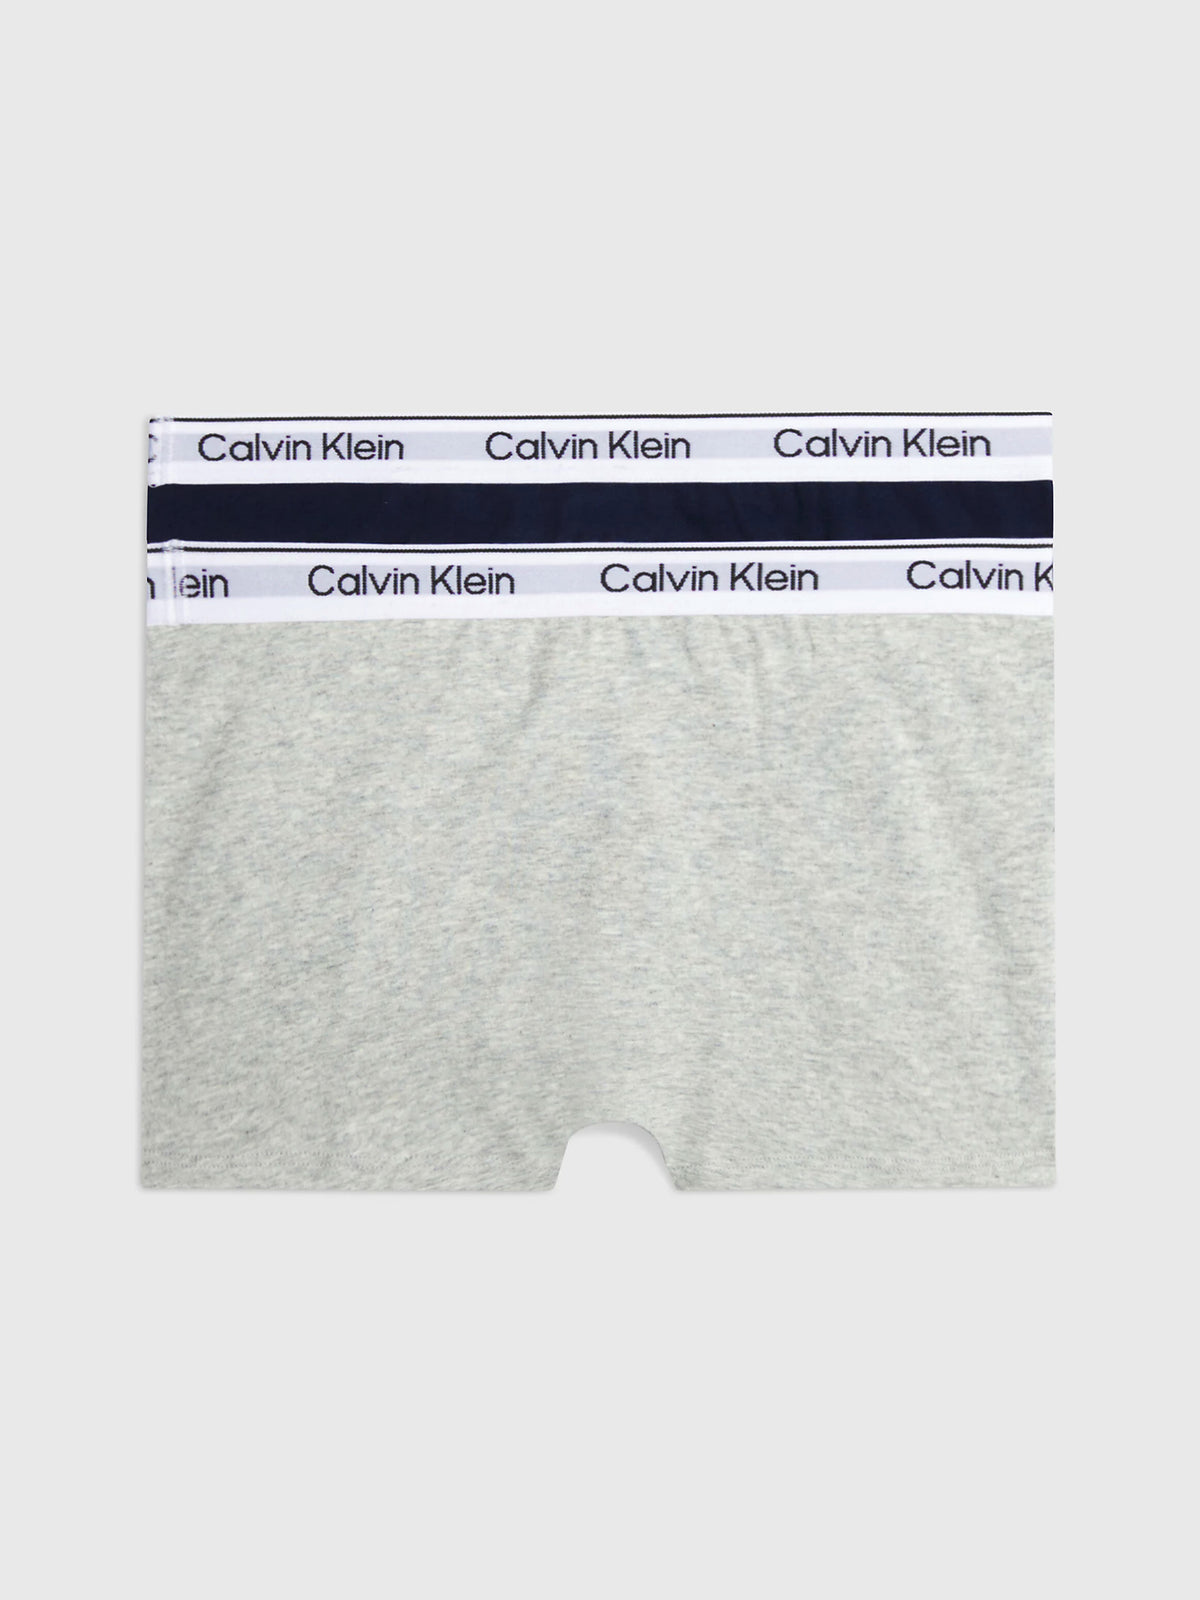 Calvin Klein Boys 'Modern Cotton' Boxer Trunks - 2-Pack, 02, B70B700449, Greyheather/Navyiris